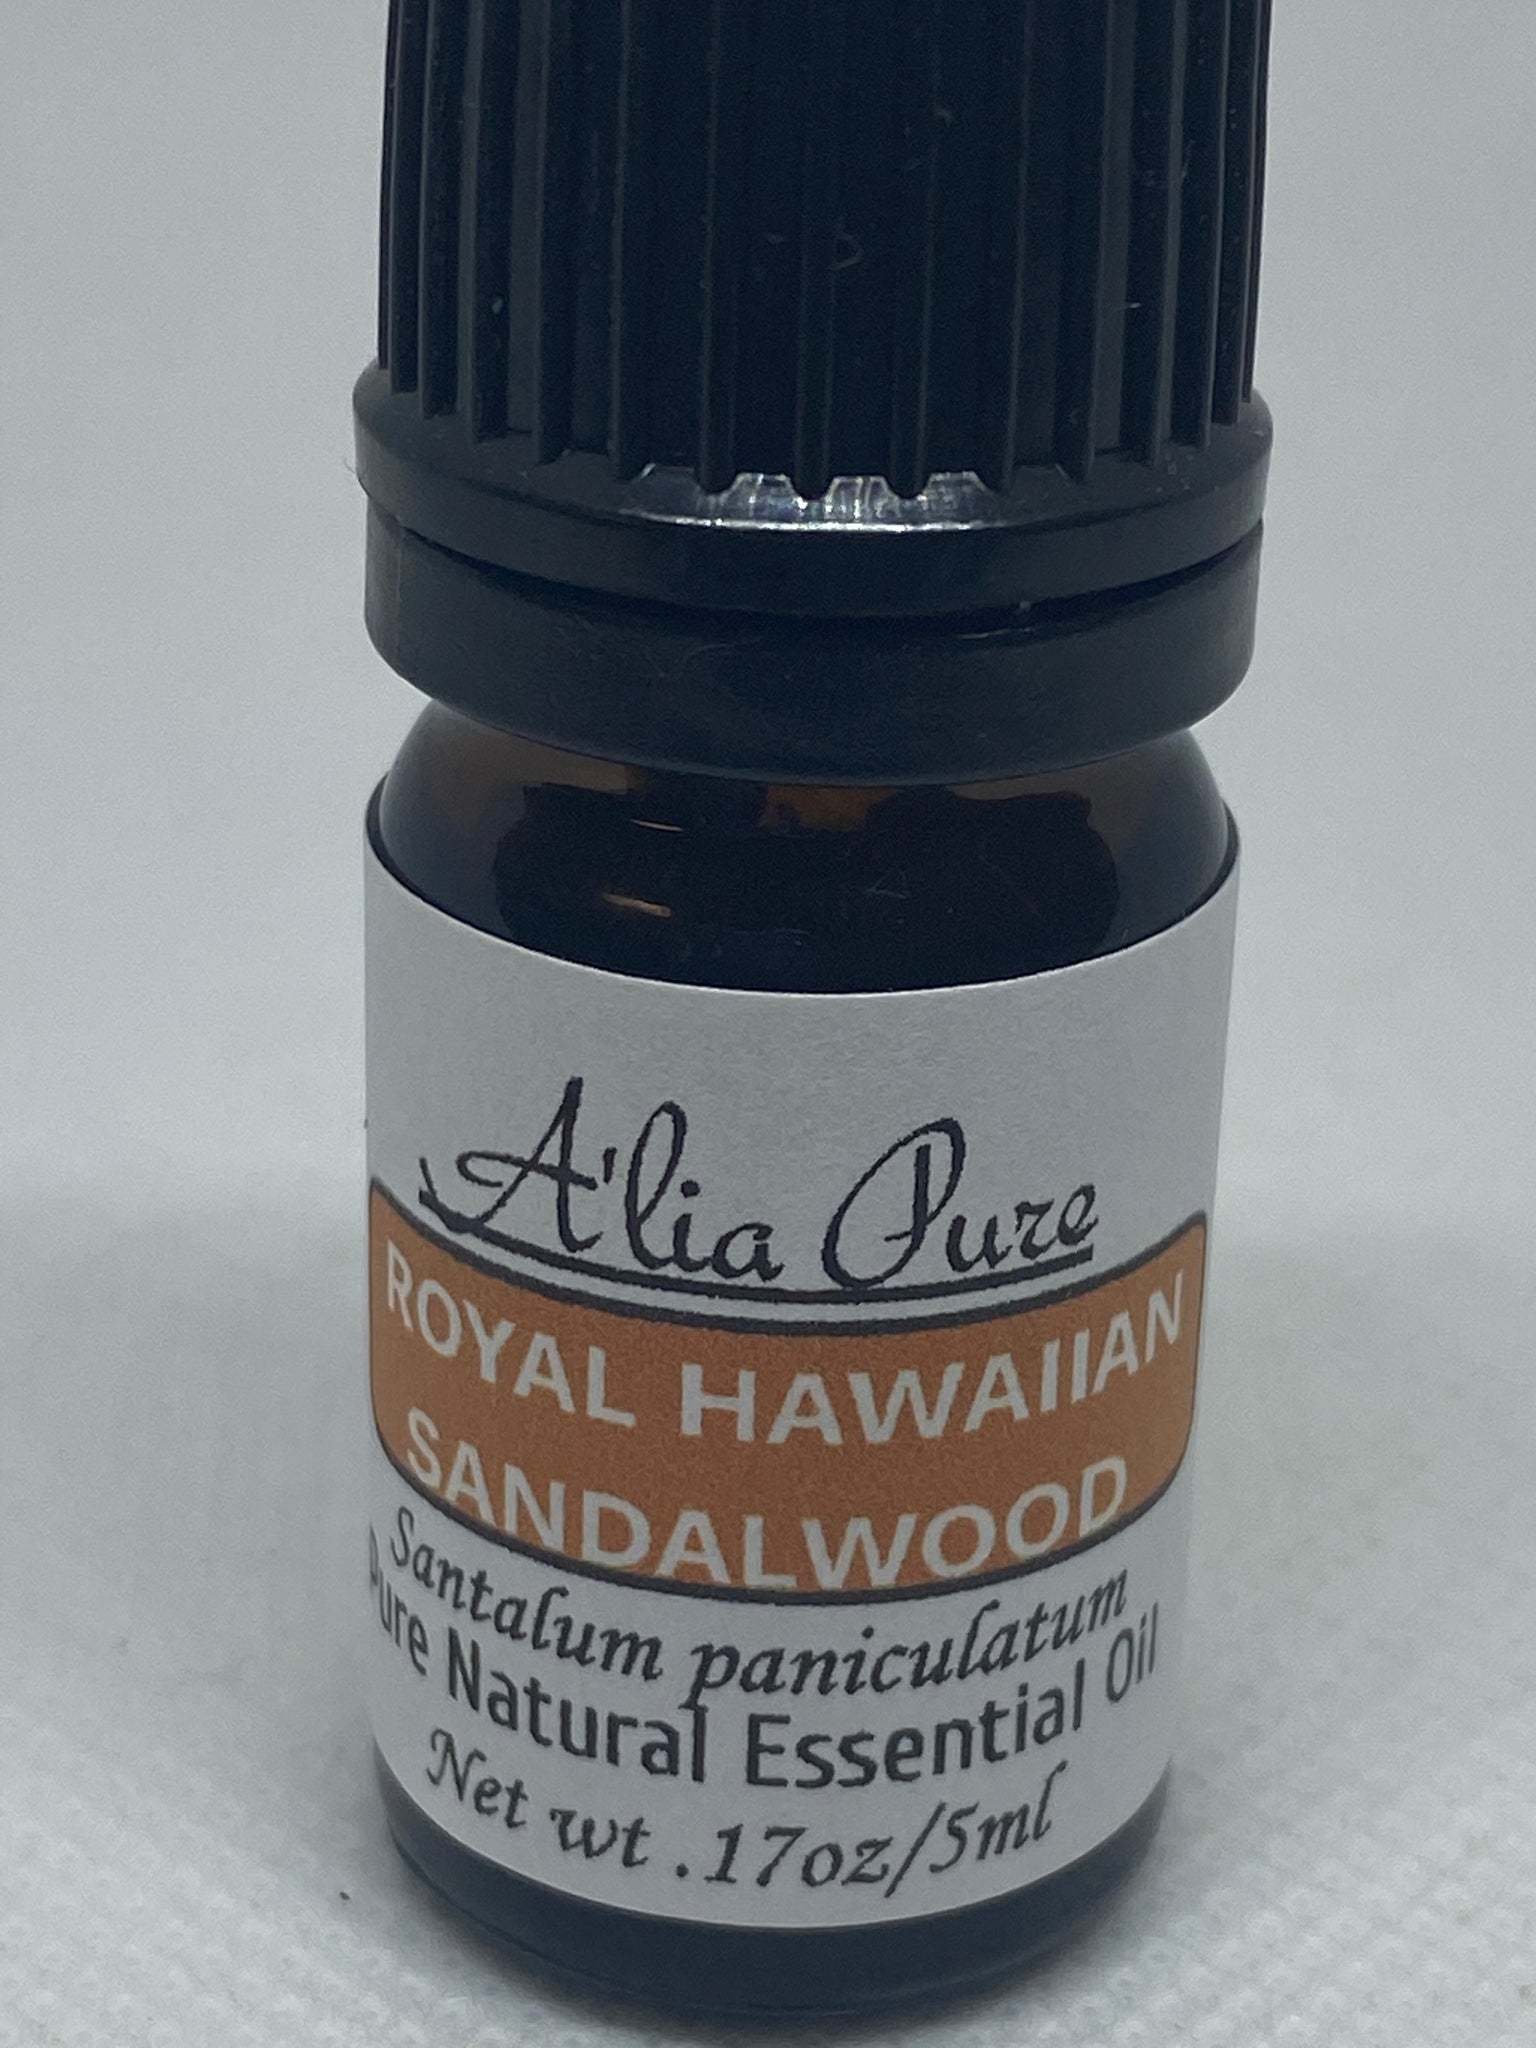 Sandalwood (Royal Hawaiian)  Essential Oil